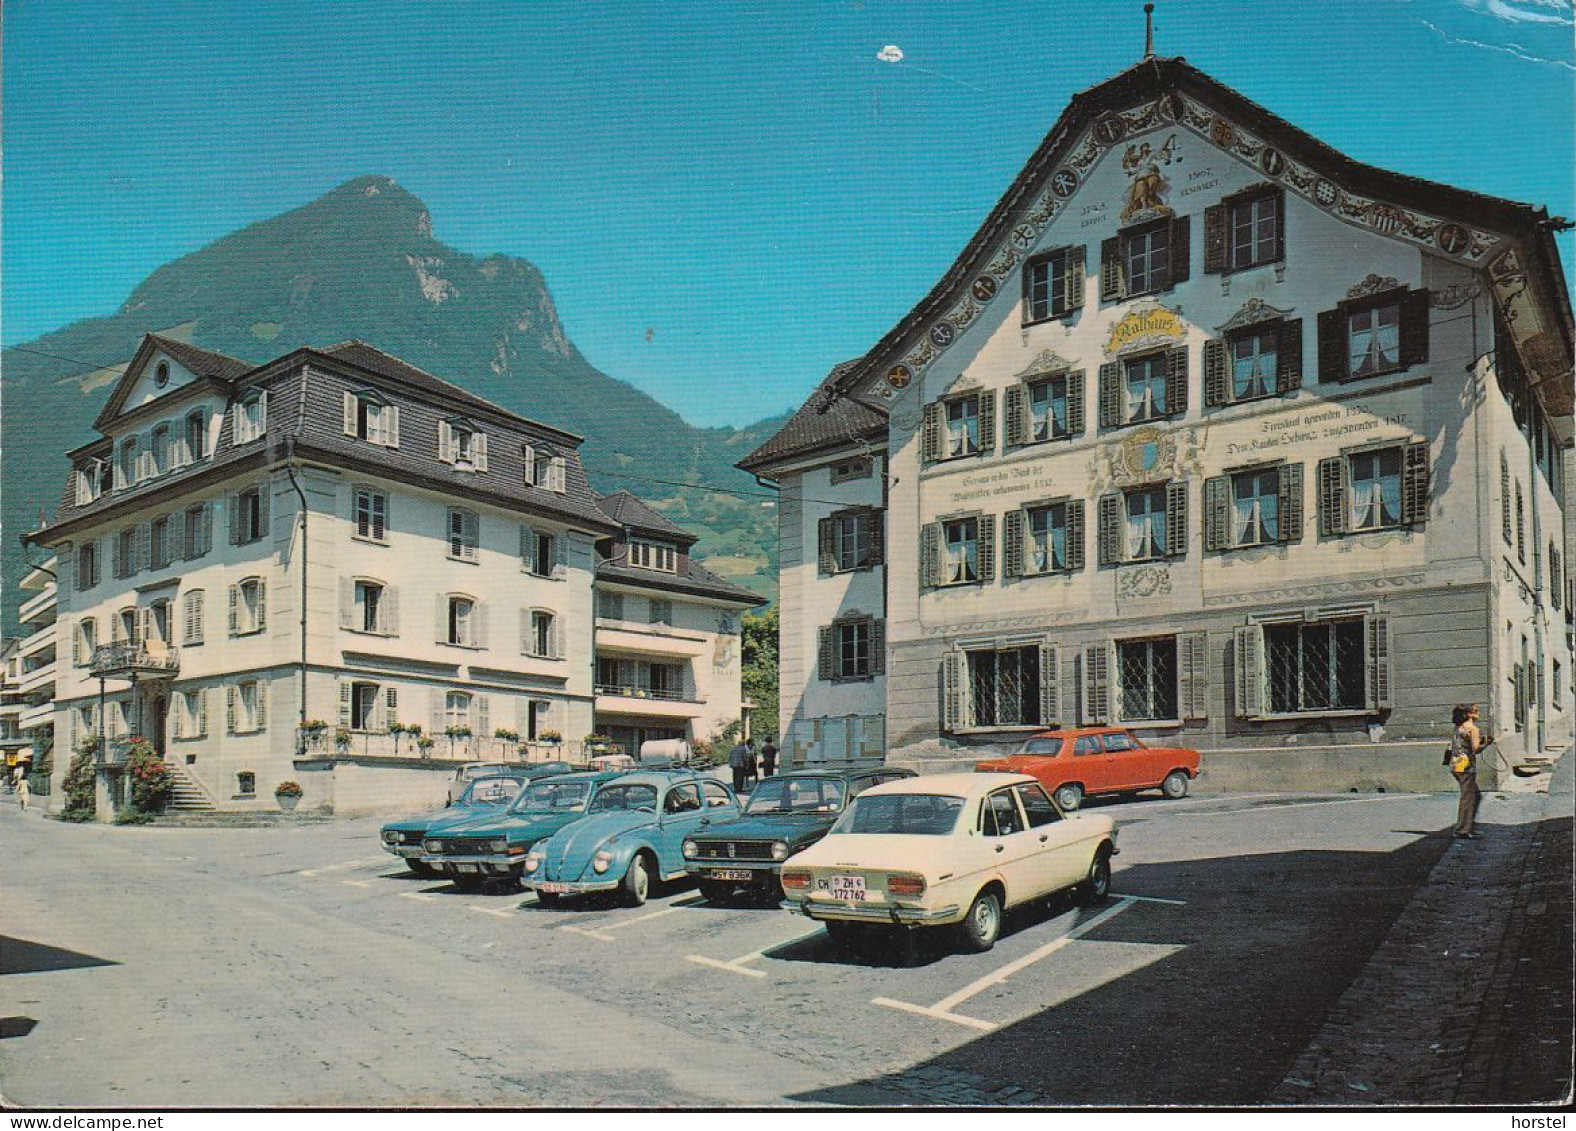 Schweiz - 6442 Gersau - Vierwaldstättersee - Erholungsheim Hof - Rathaus - Cars - VW Käfer - Opel Kadett - Peugeot ? - Gersau